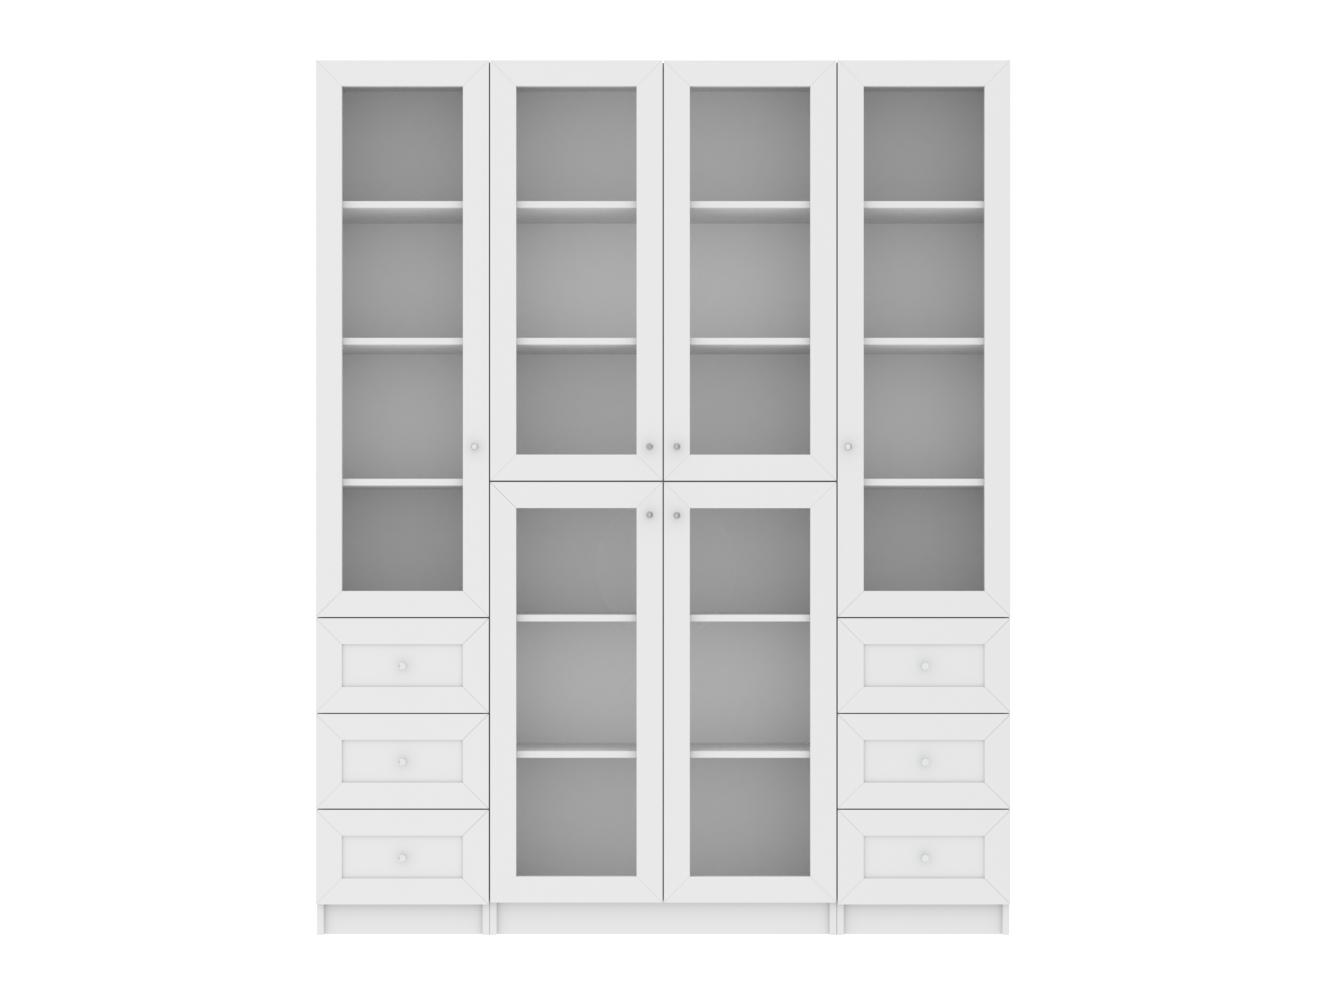  Книжный шкаф Билли 362 white ИКЕА (IKEA) изображение товара